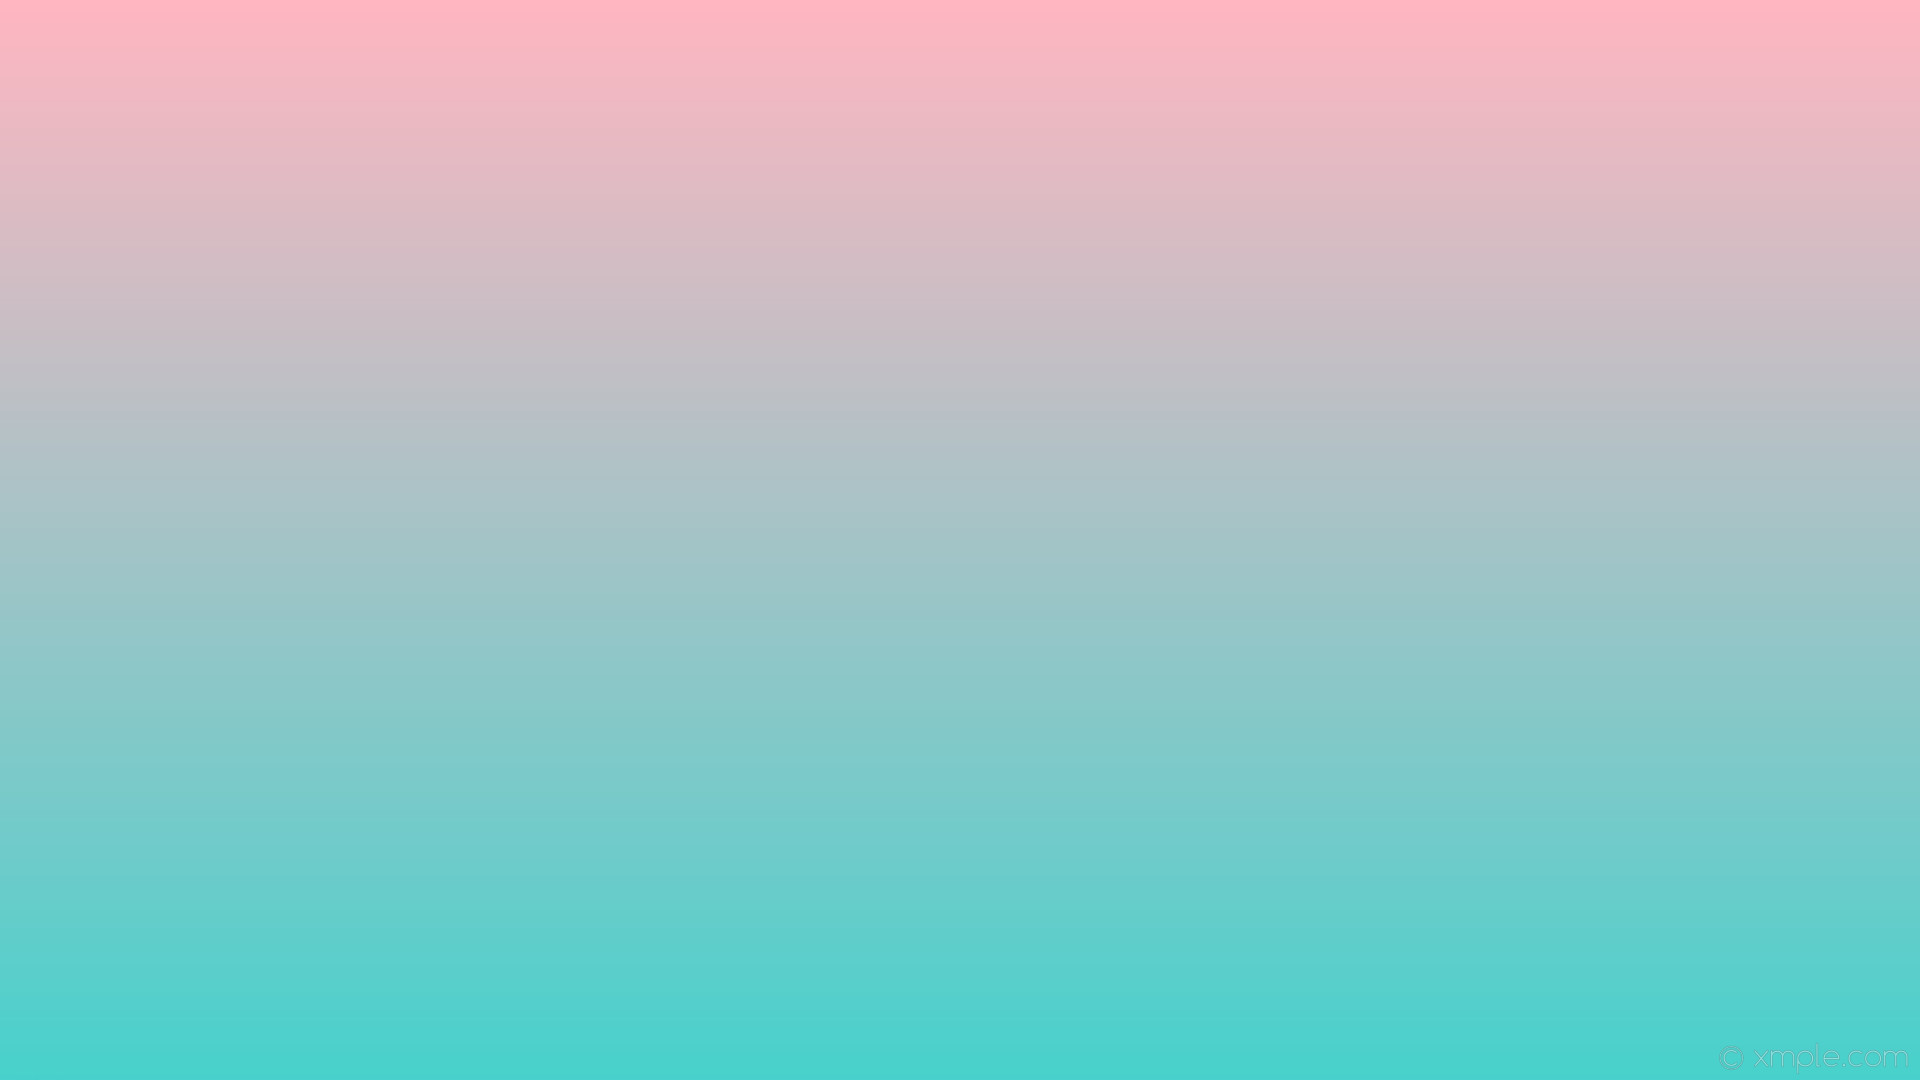 1920x1080 wallpaper pink gradient blue linear light pink medium turquoise #ffb6c1  #48d1cc 90Â°